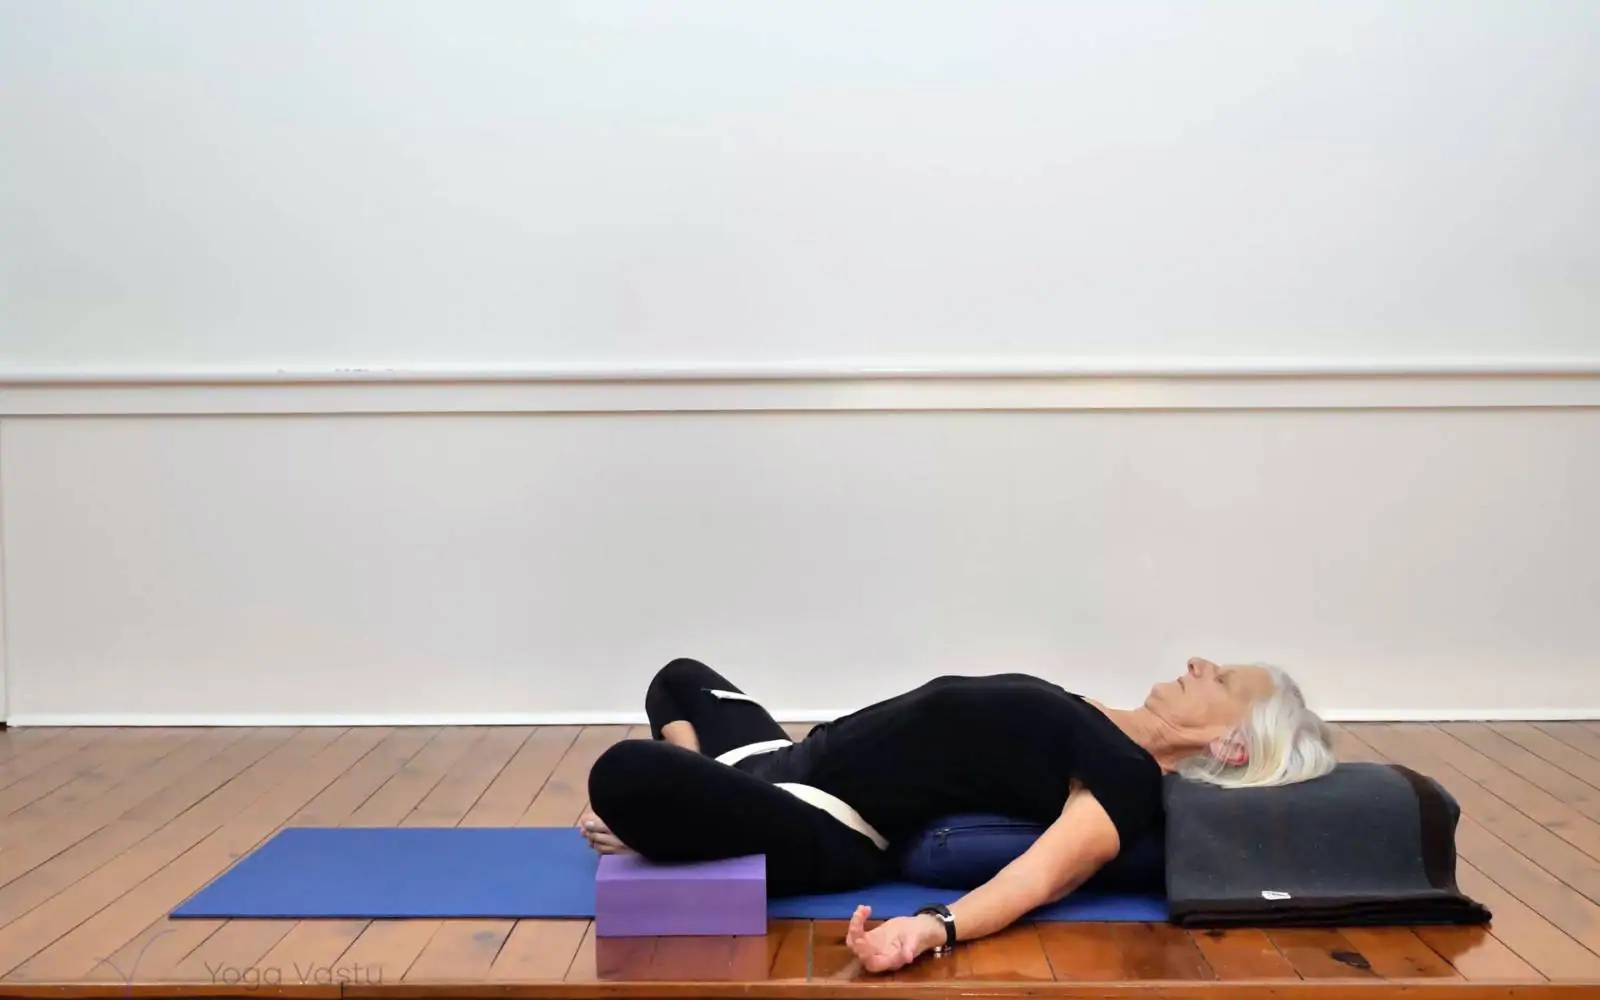 Yoga Essentials For Beginners